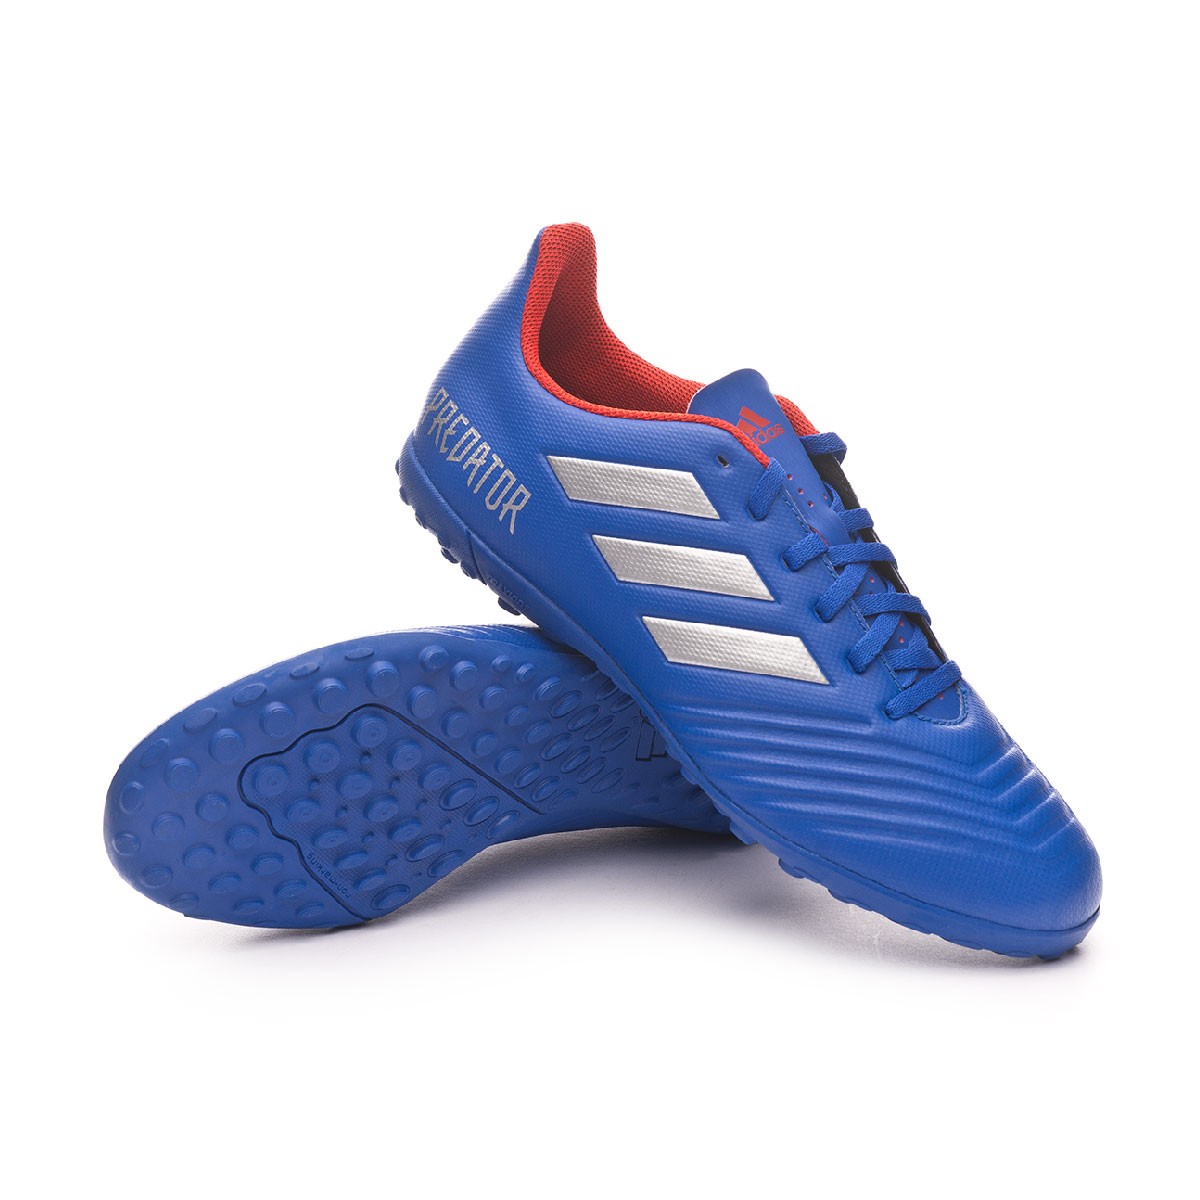 Football Boot adidas Predator Tango 19.4 Turf Bold blue-Silver  metallic-Active red - Football store Fútbol Emotion